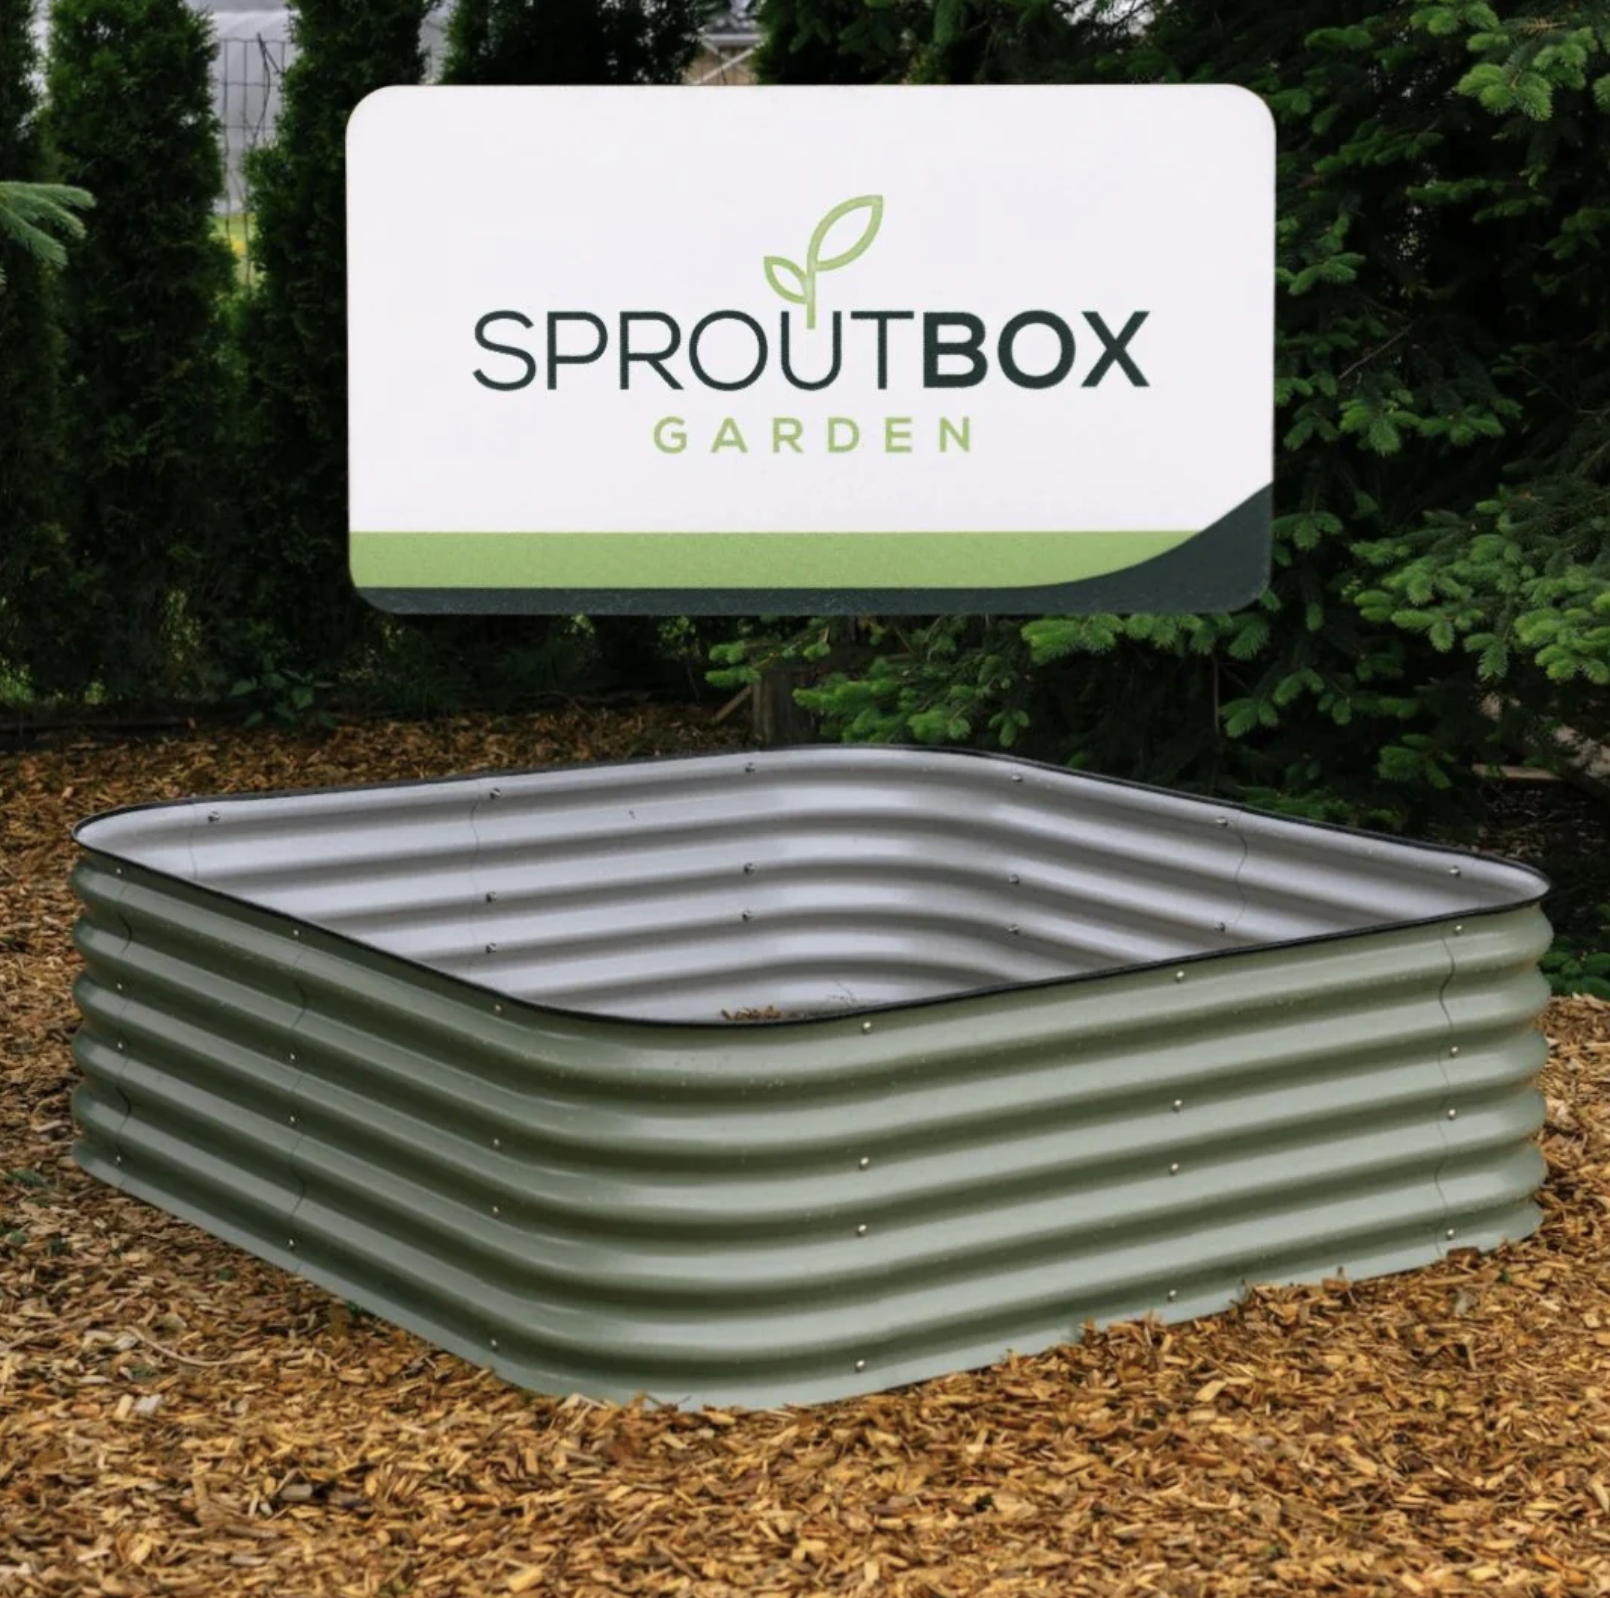 buy sproutbox garden aluzinc metal raised garden beds online in canada